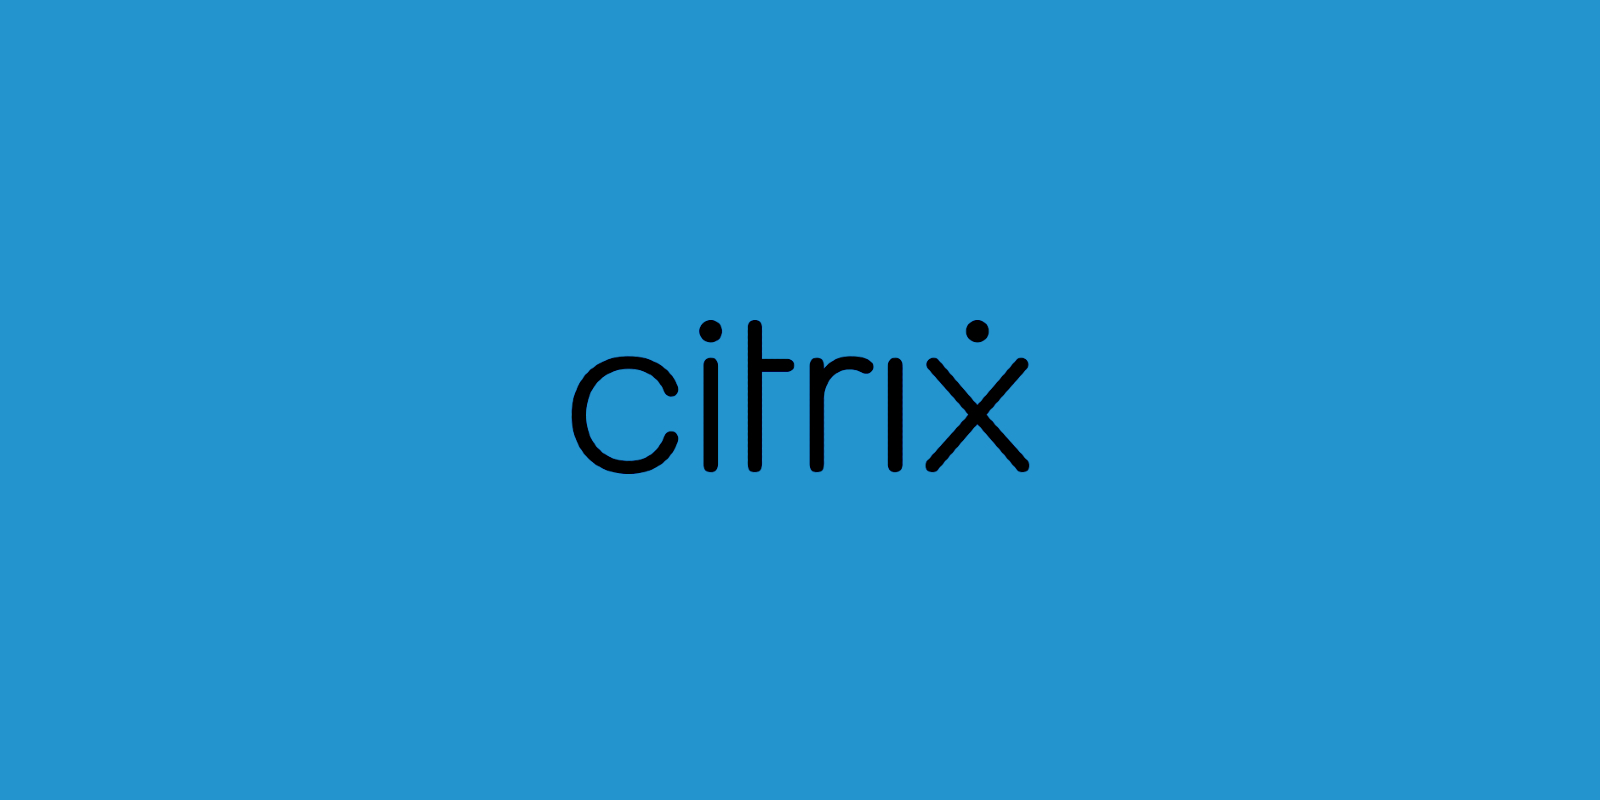 Citrix.jpg